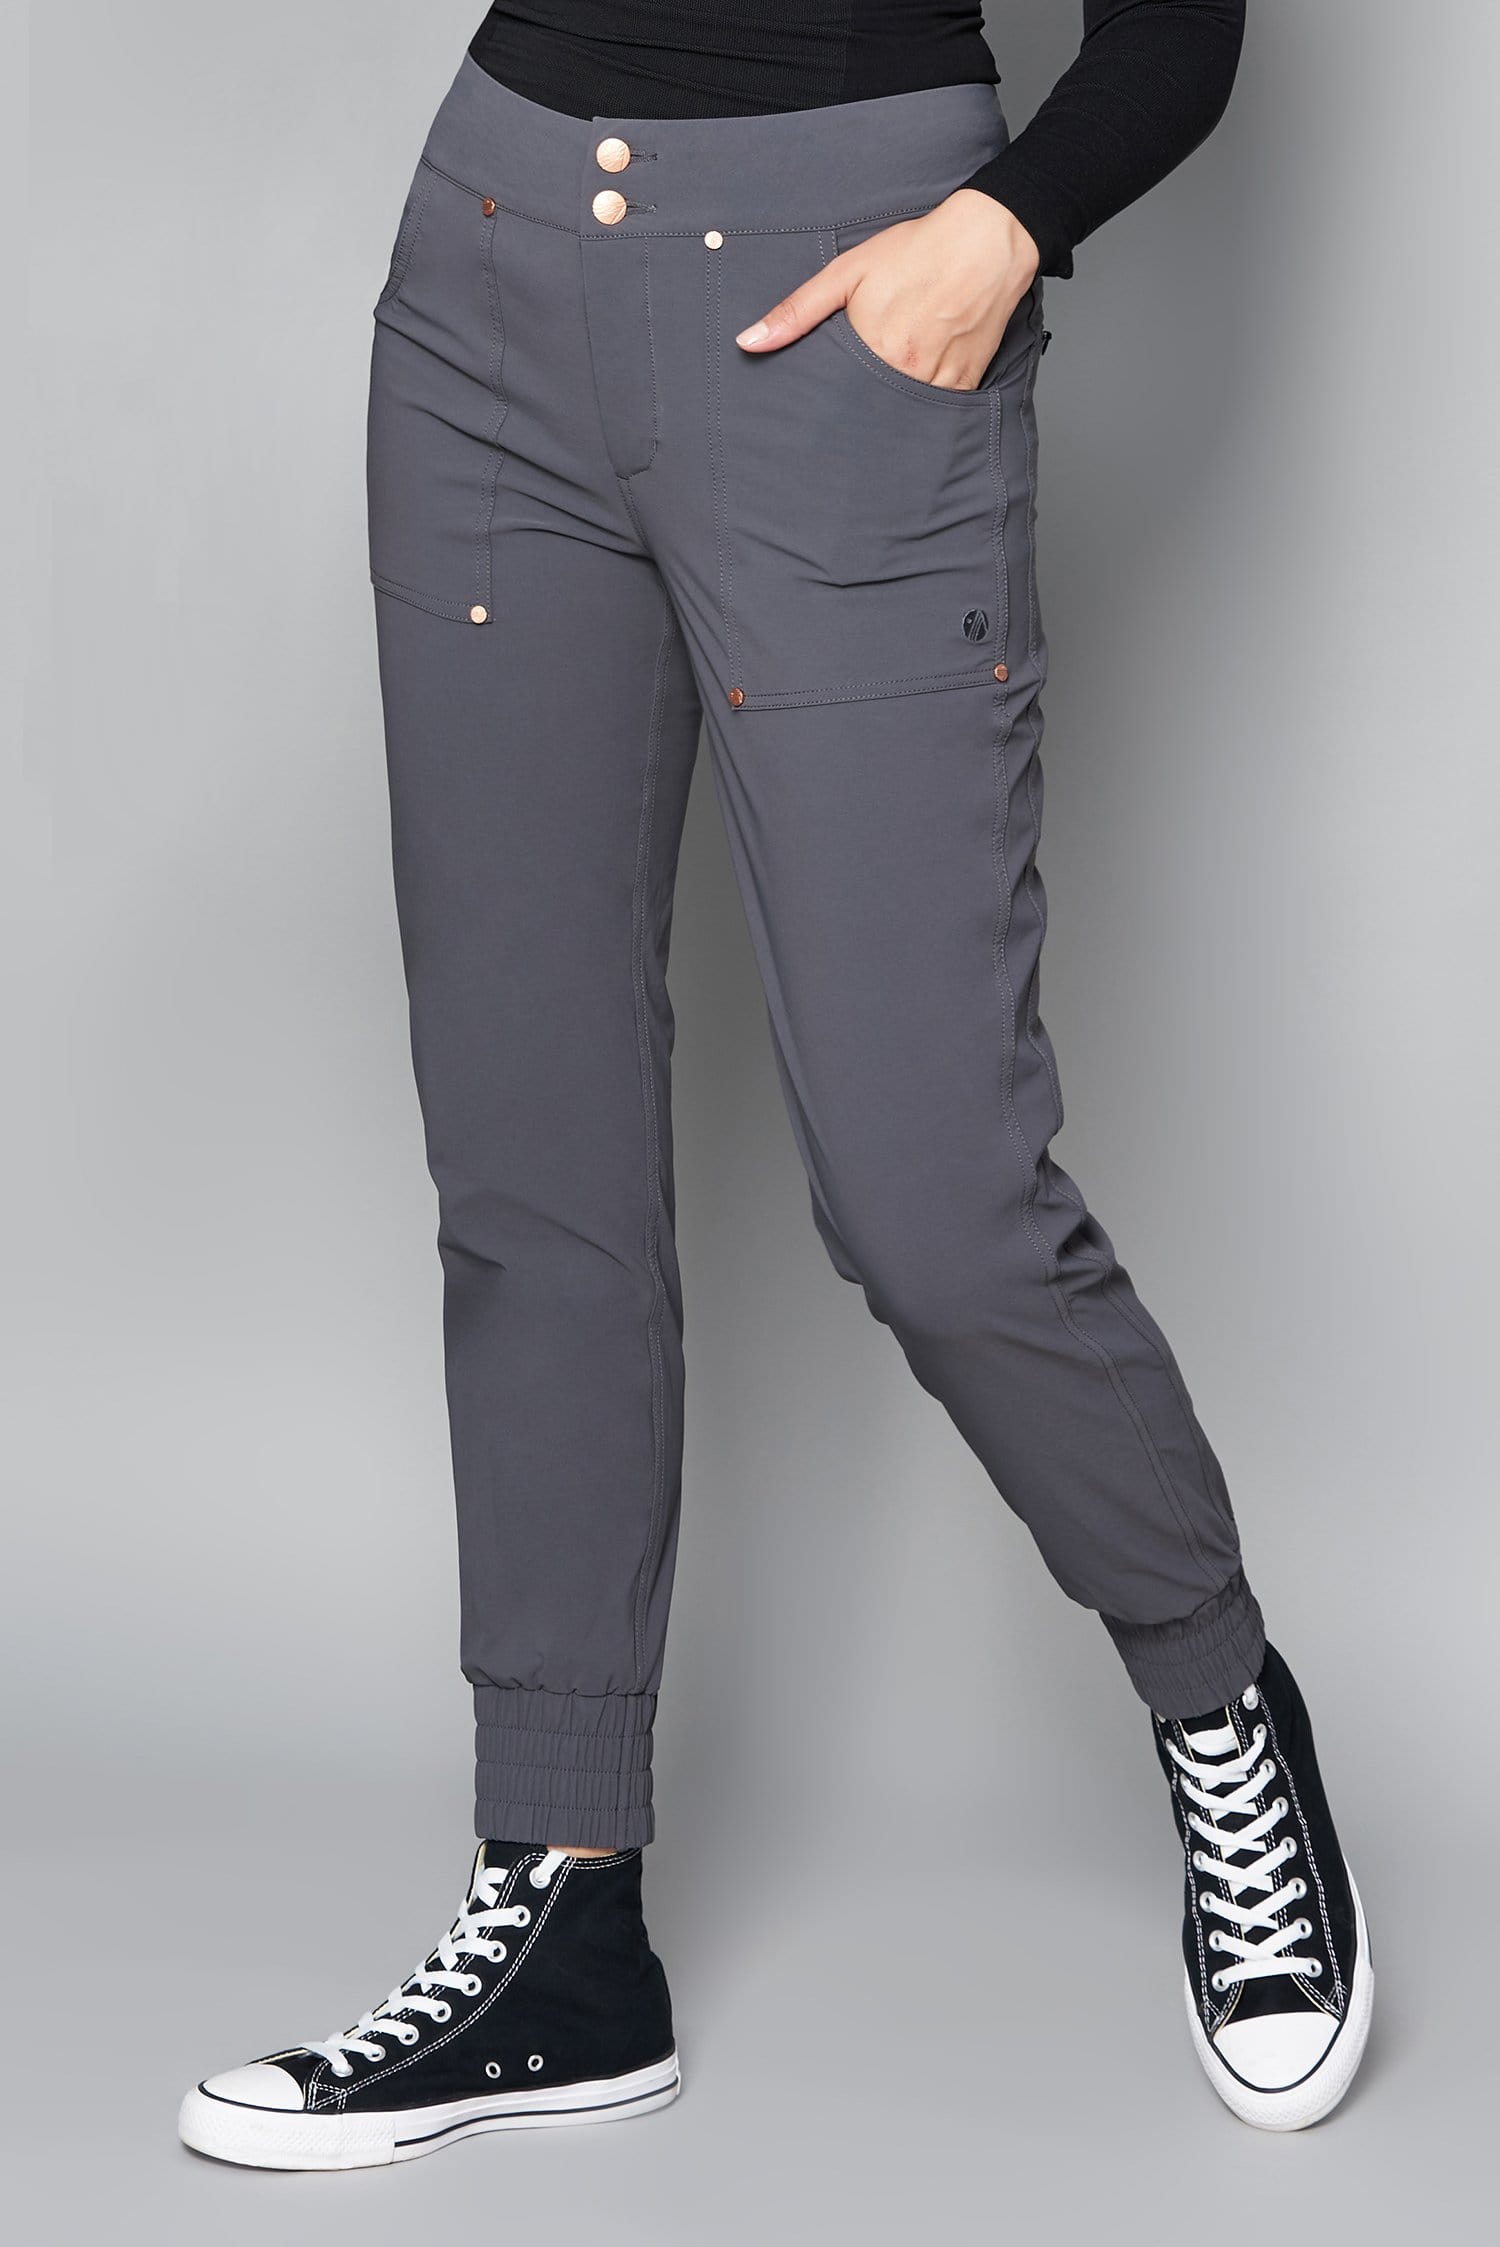 Casual Stroll Pants - Storm Grey - 28r / Uk10 - Womens - Acai Outdoorwear